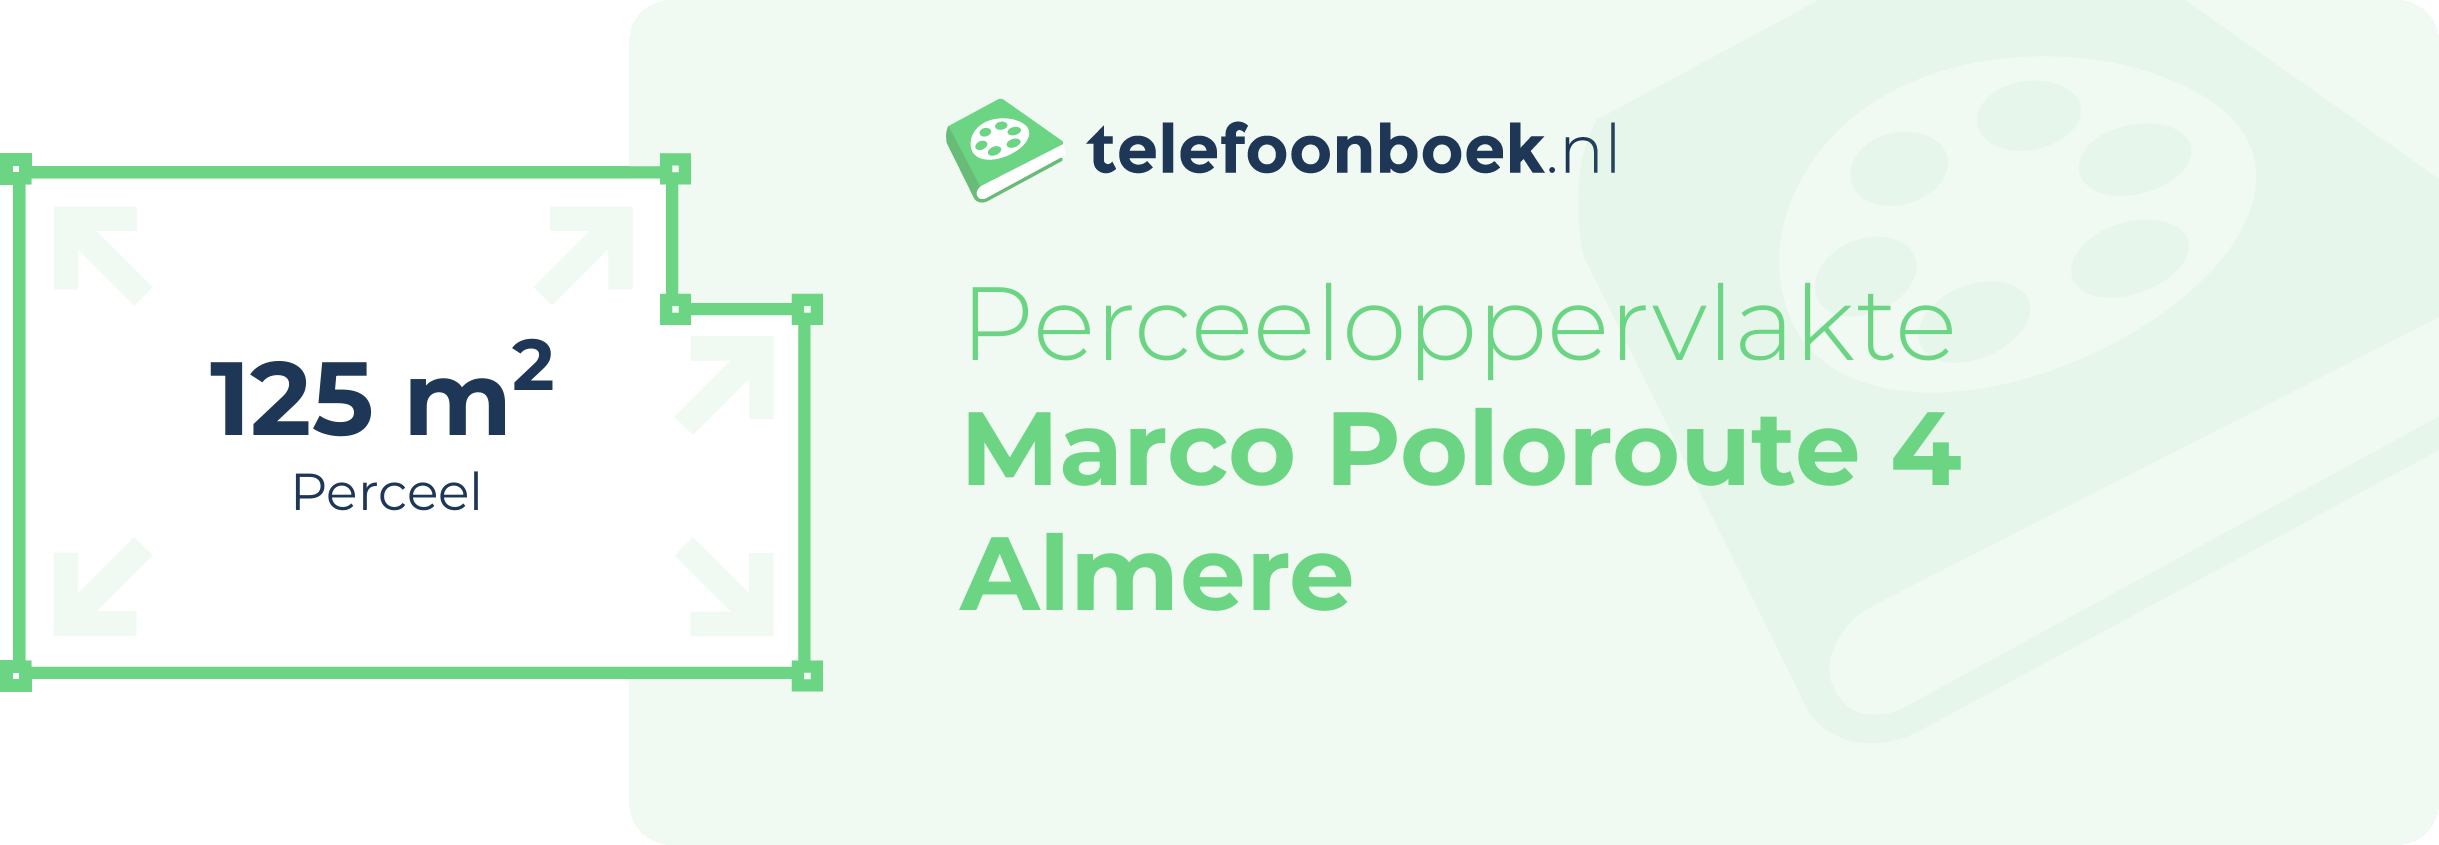 Perceeloppervlakte Marco Poloroute 4 Almere